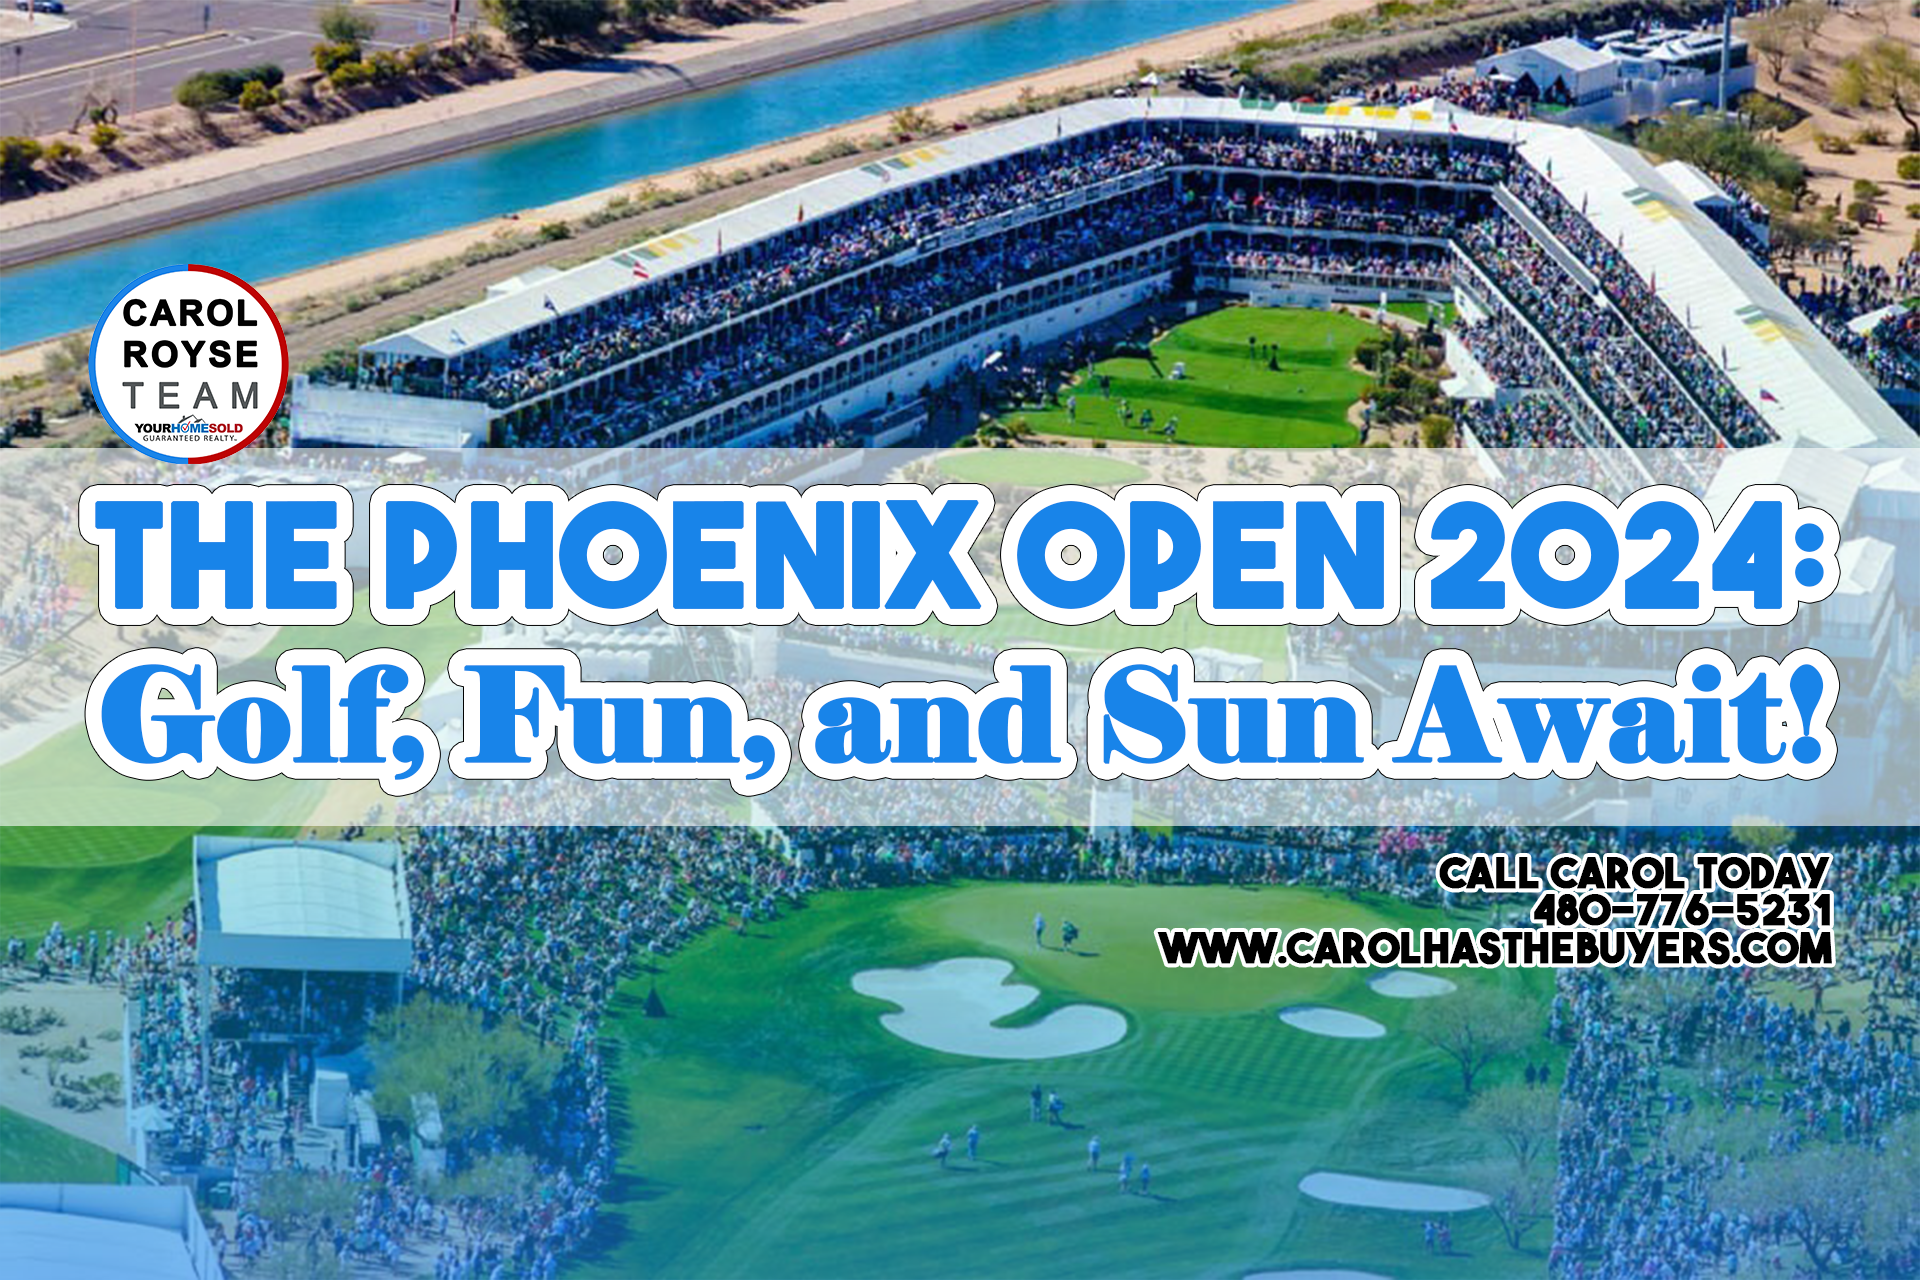 The Phoenix Open 2024: Golf, Fun, and Sun Await!